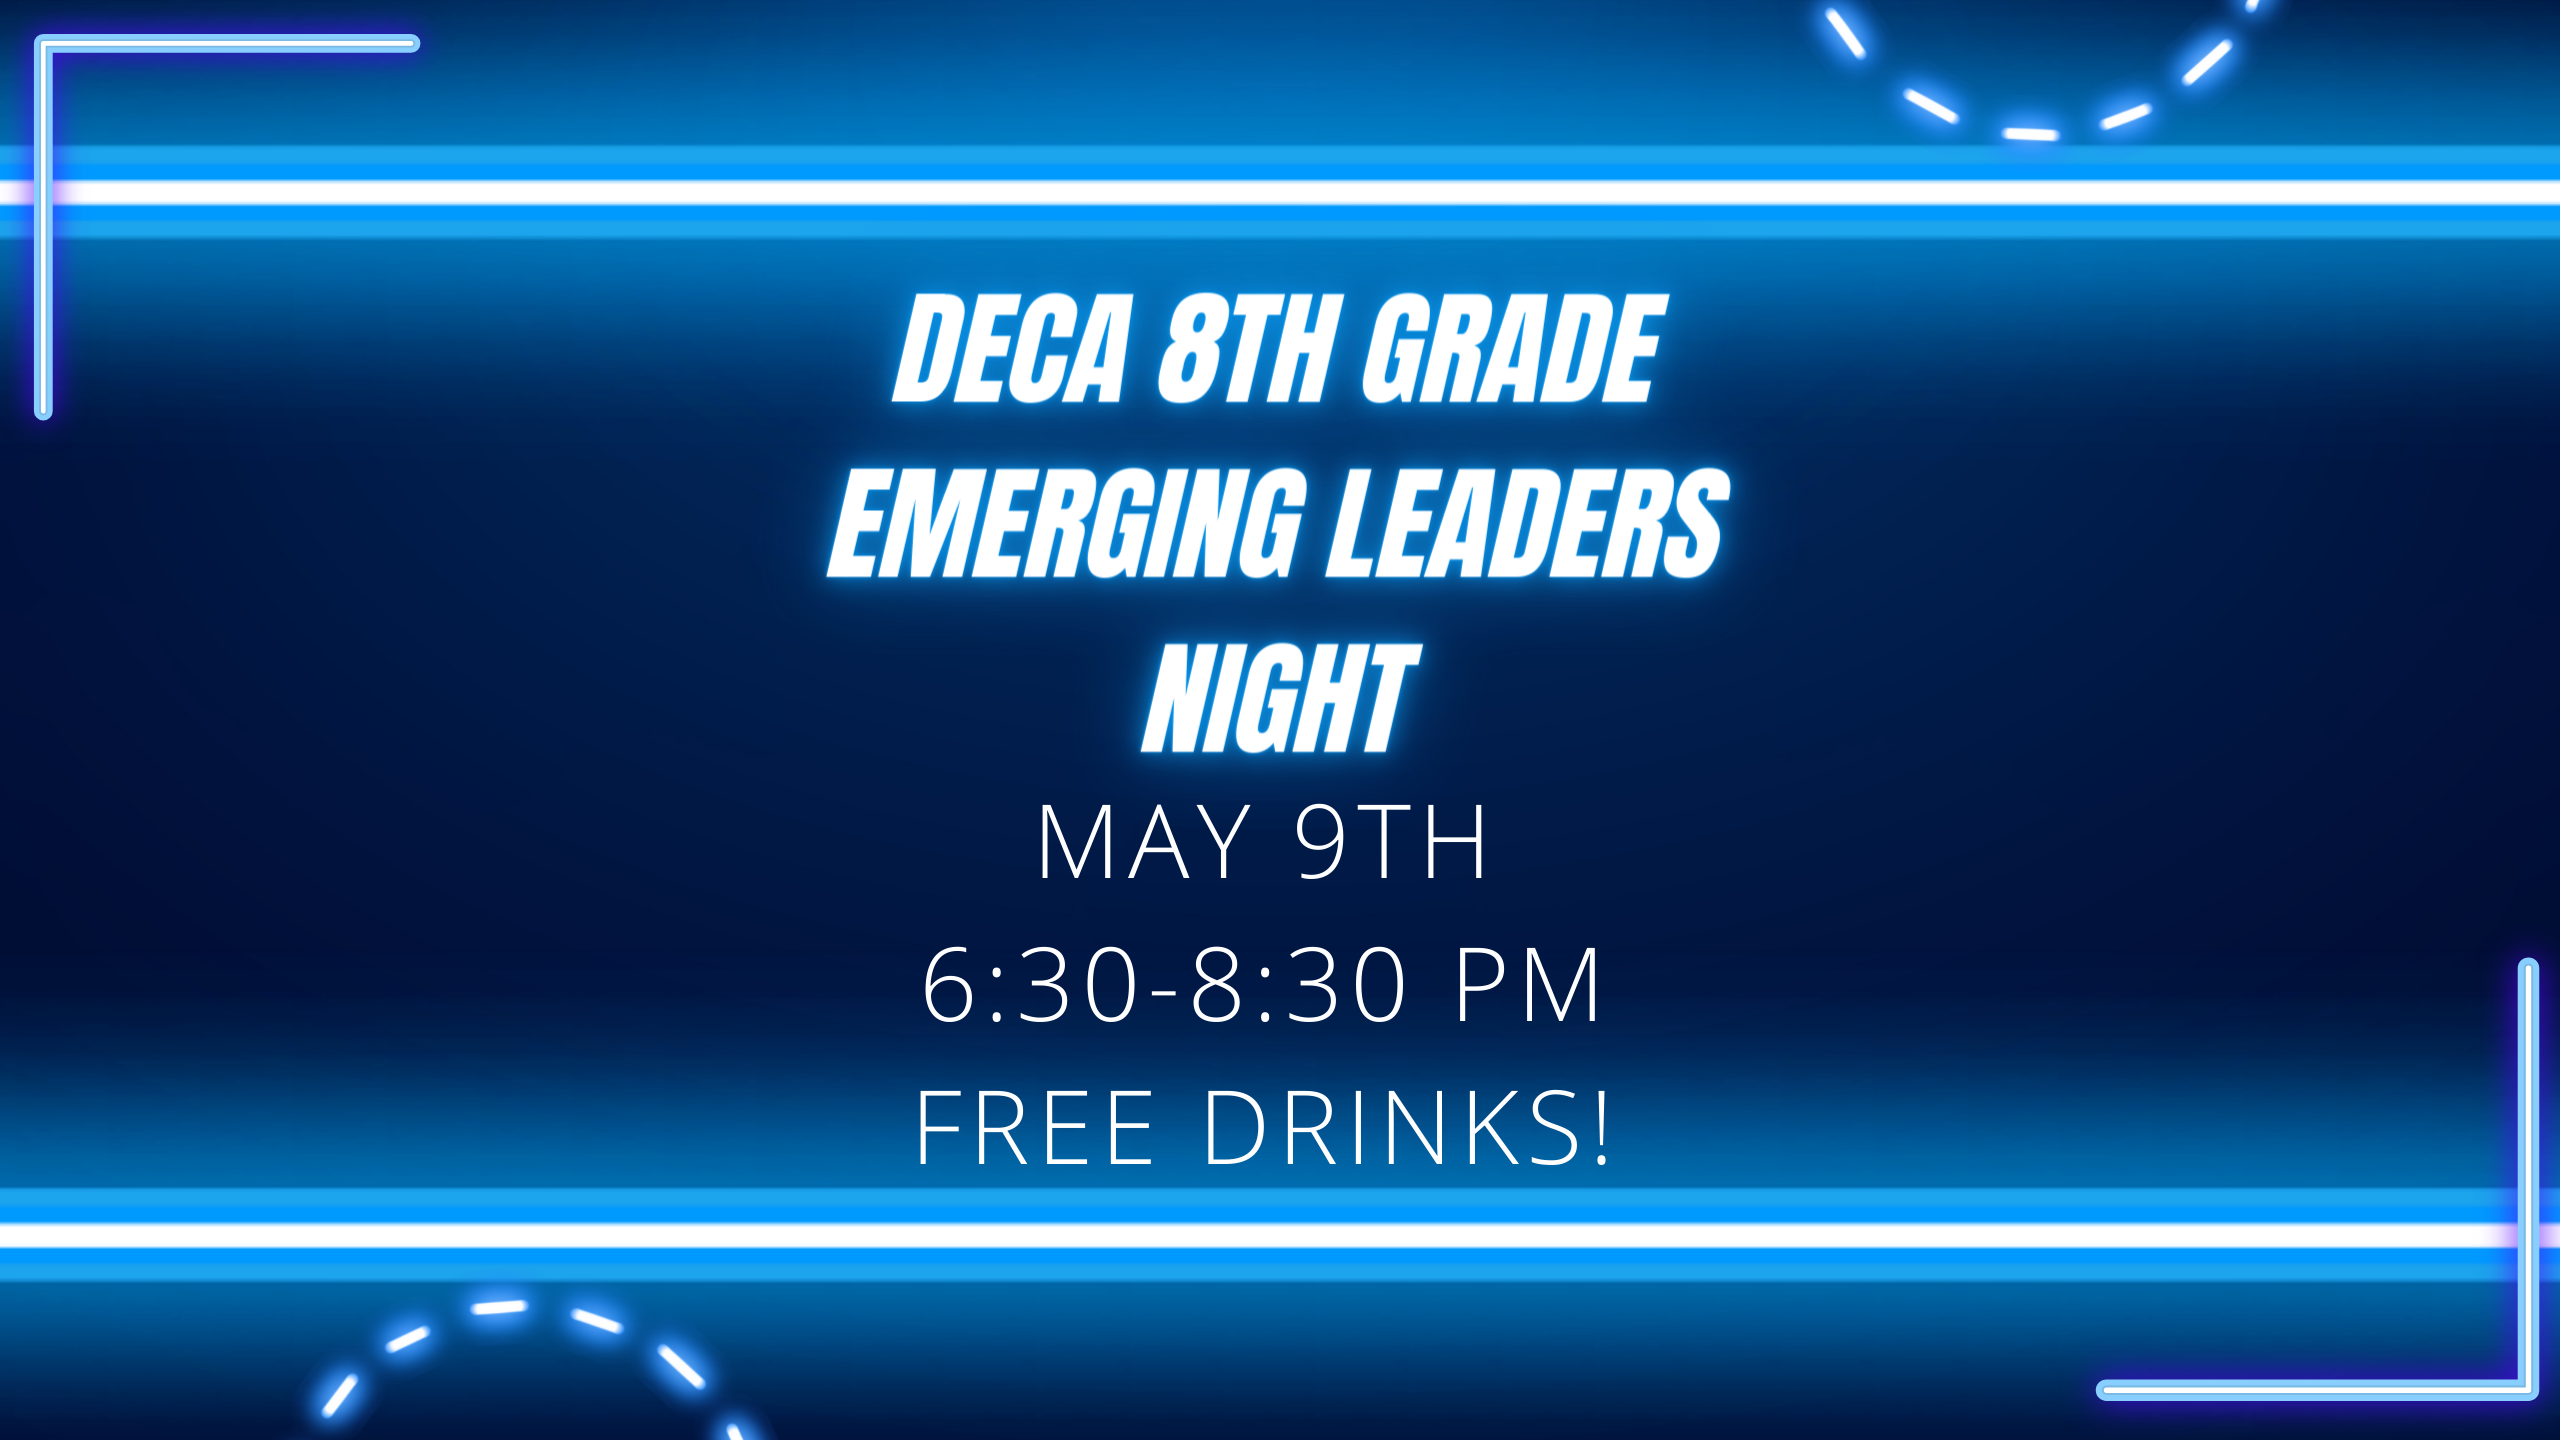 DECA 8th grade emerging leaders night